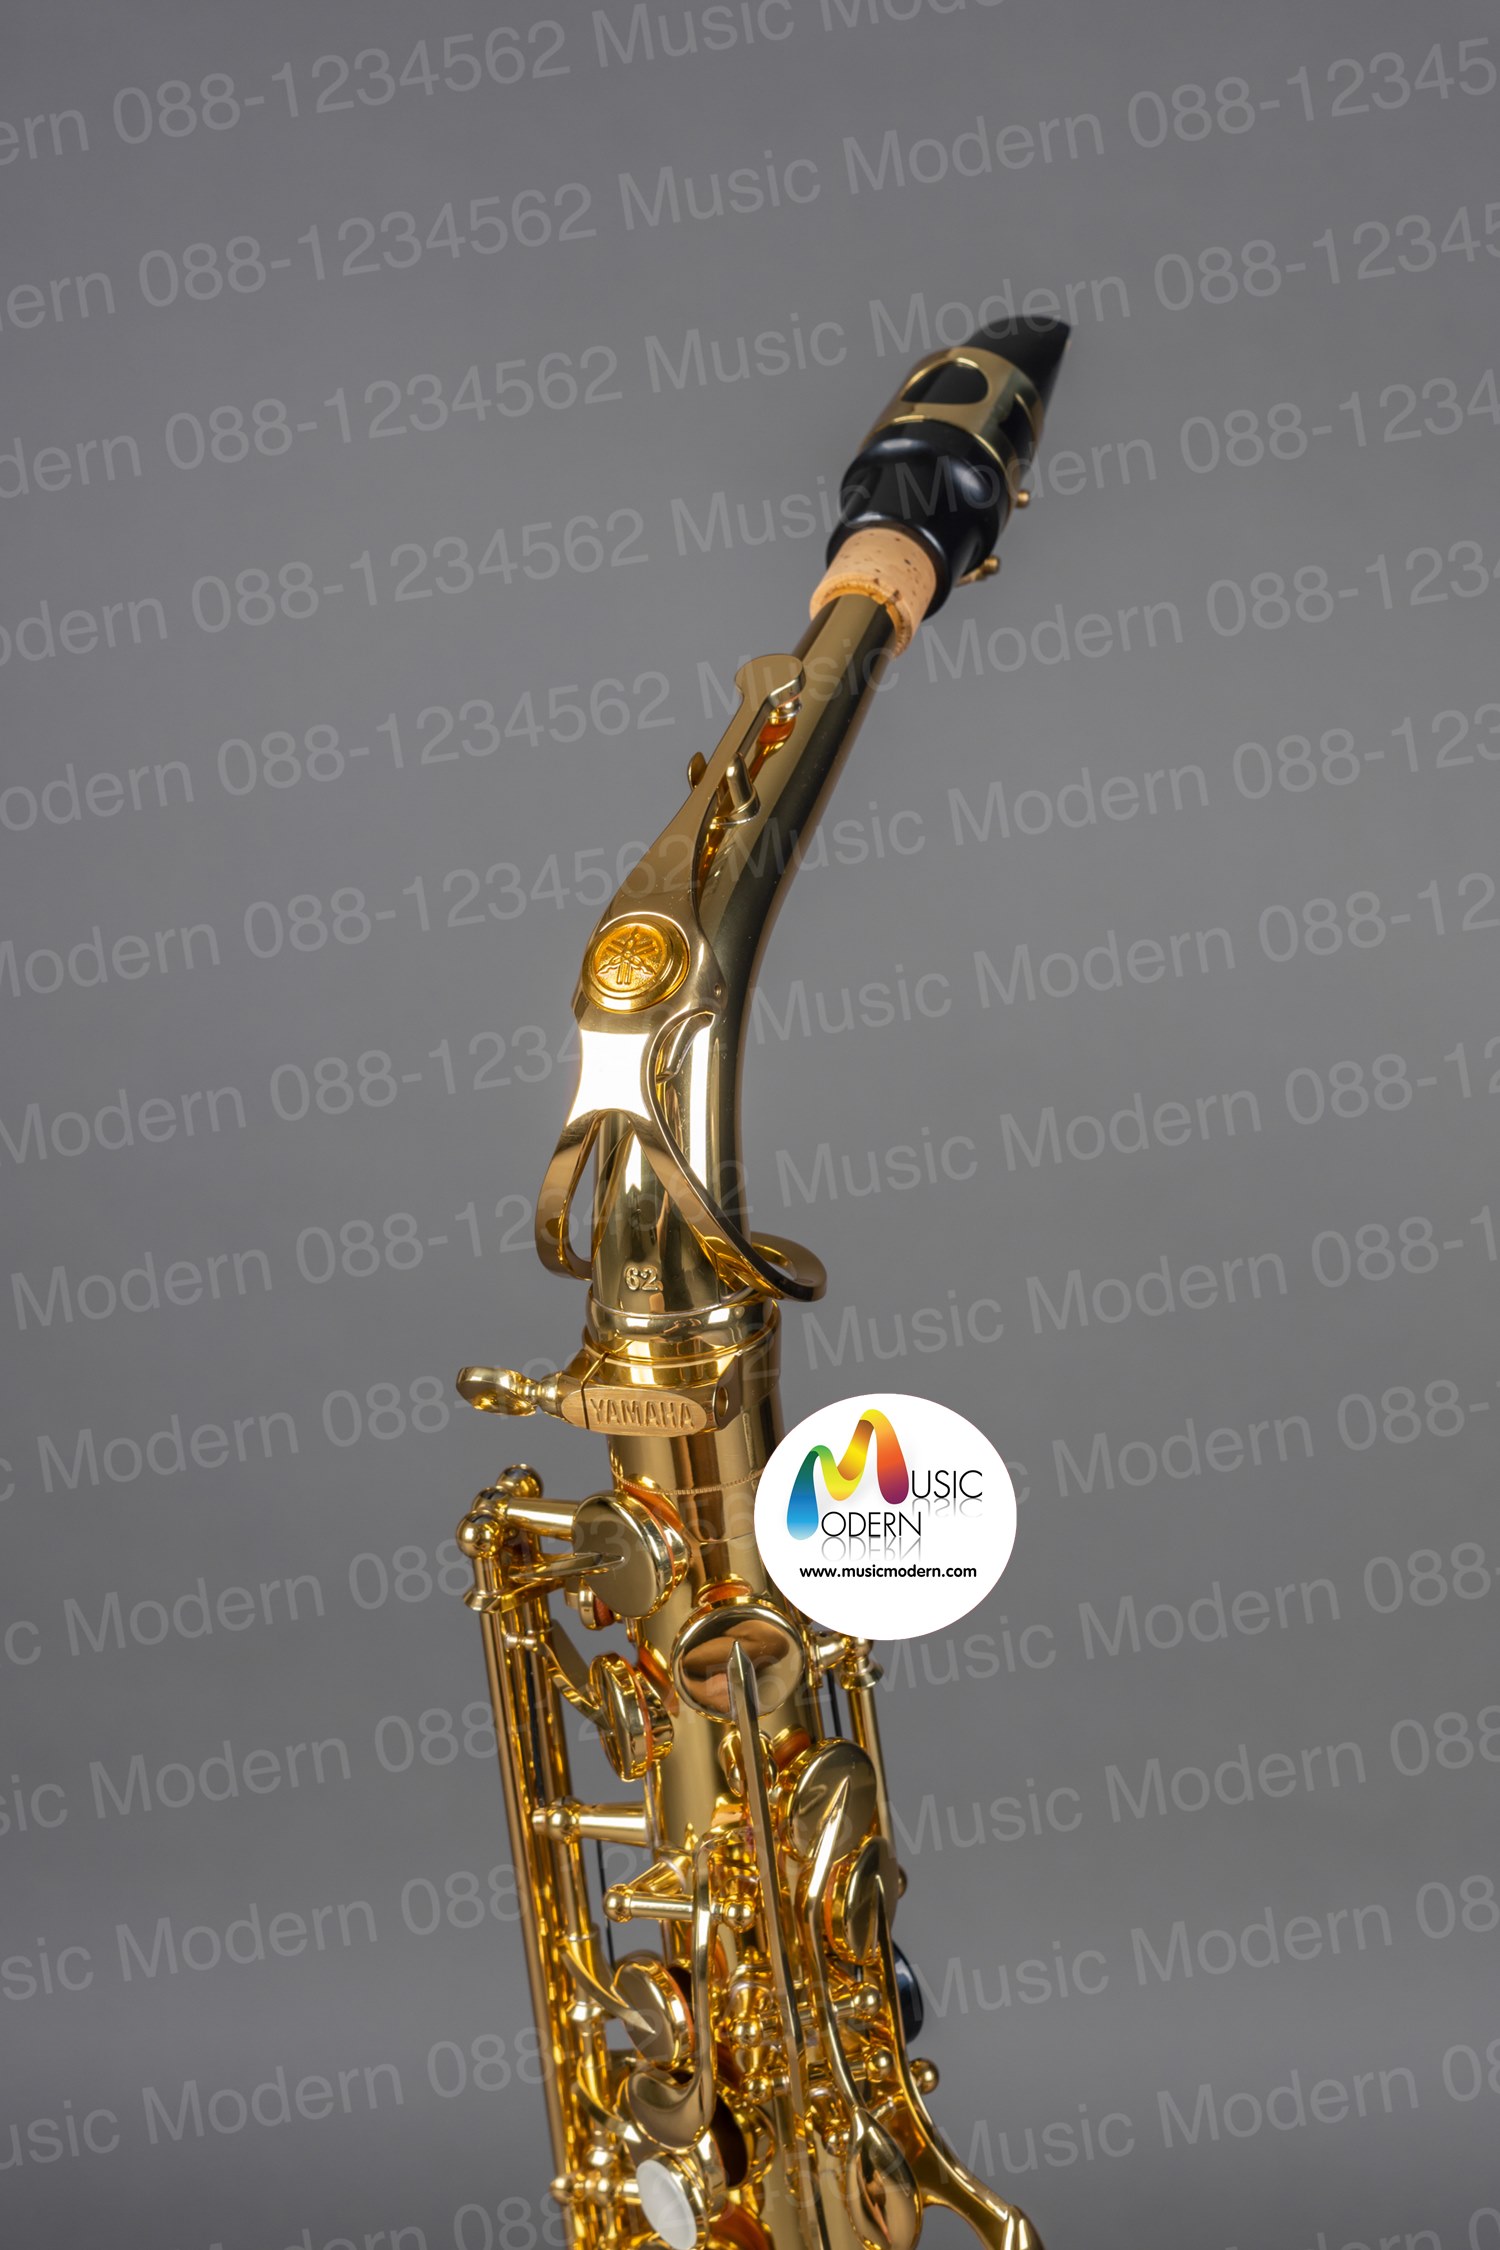 Yamaha Alto Saxophone YAS-62